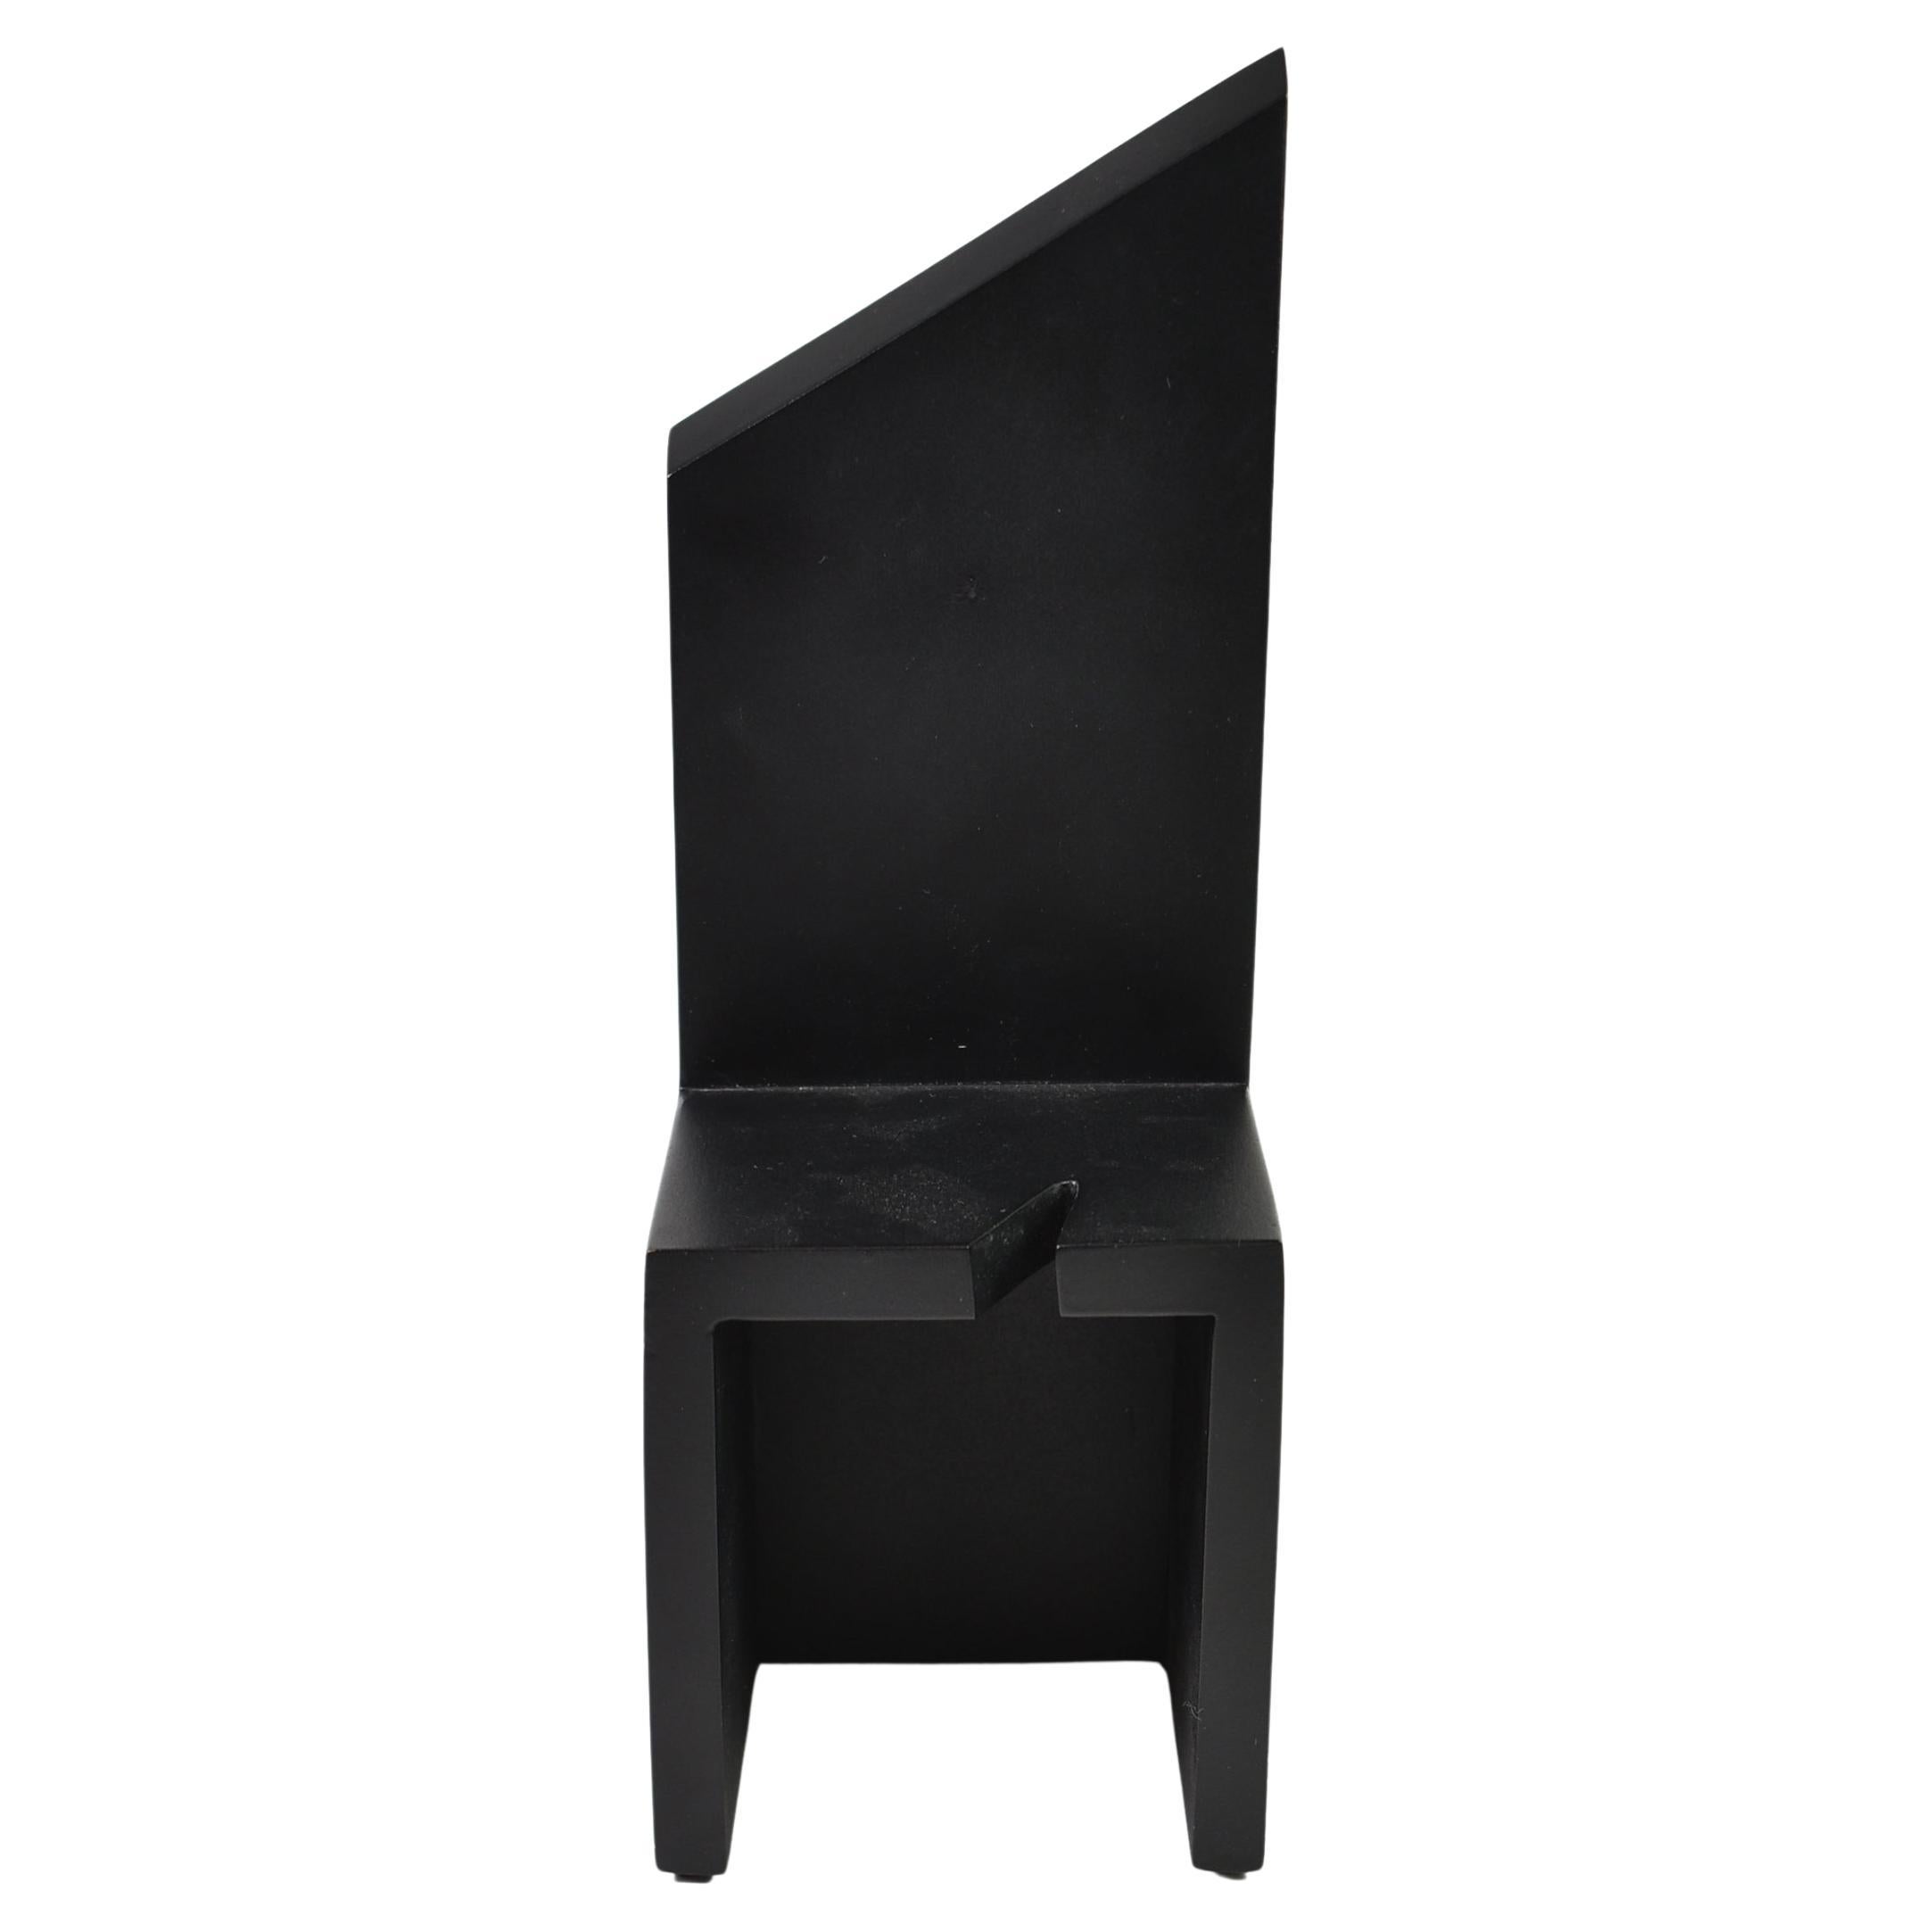 Black Iron Chair Sculpture by Lois Teicher, 1992 For Sale